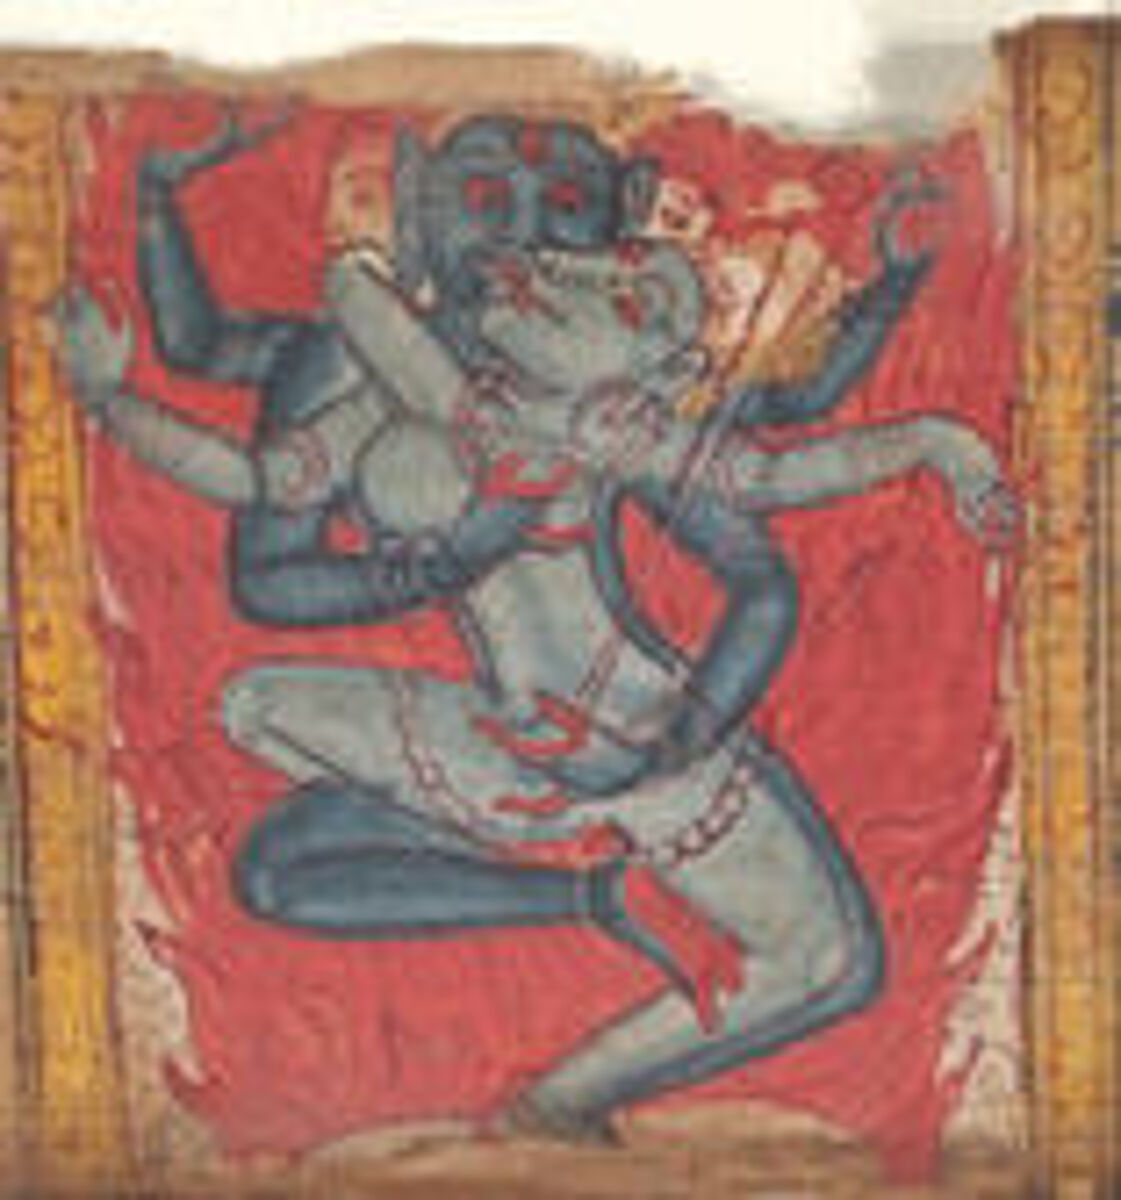 Chakrasamvara in Sexual Union with His Consort, Vajravarahi, Leaf from a dispersed Ashtasahasrika Prajnaparamita (Perfection of Wisdom) Manuscript, Ink and color on palm leaf, India (Bihar or West Bengal) 